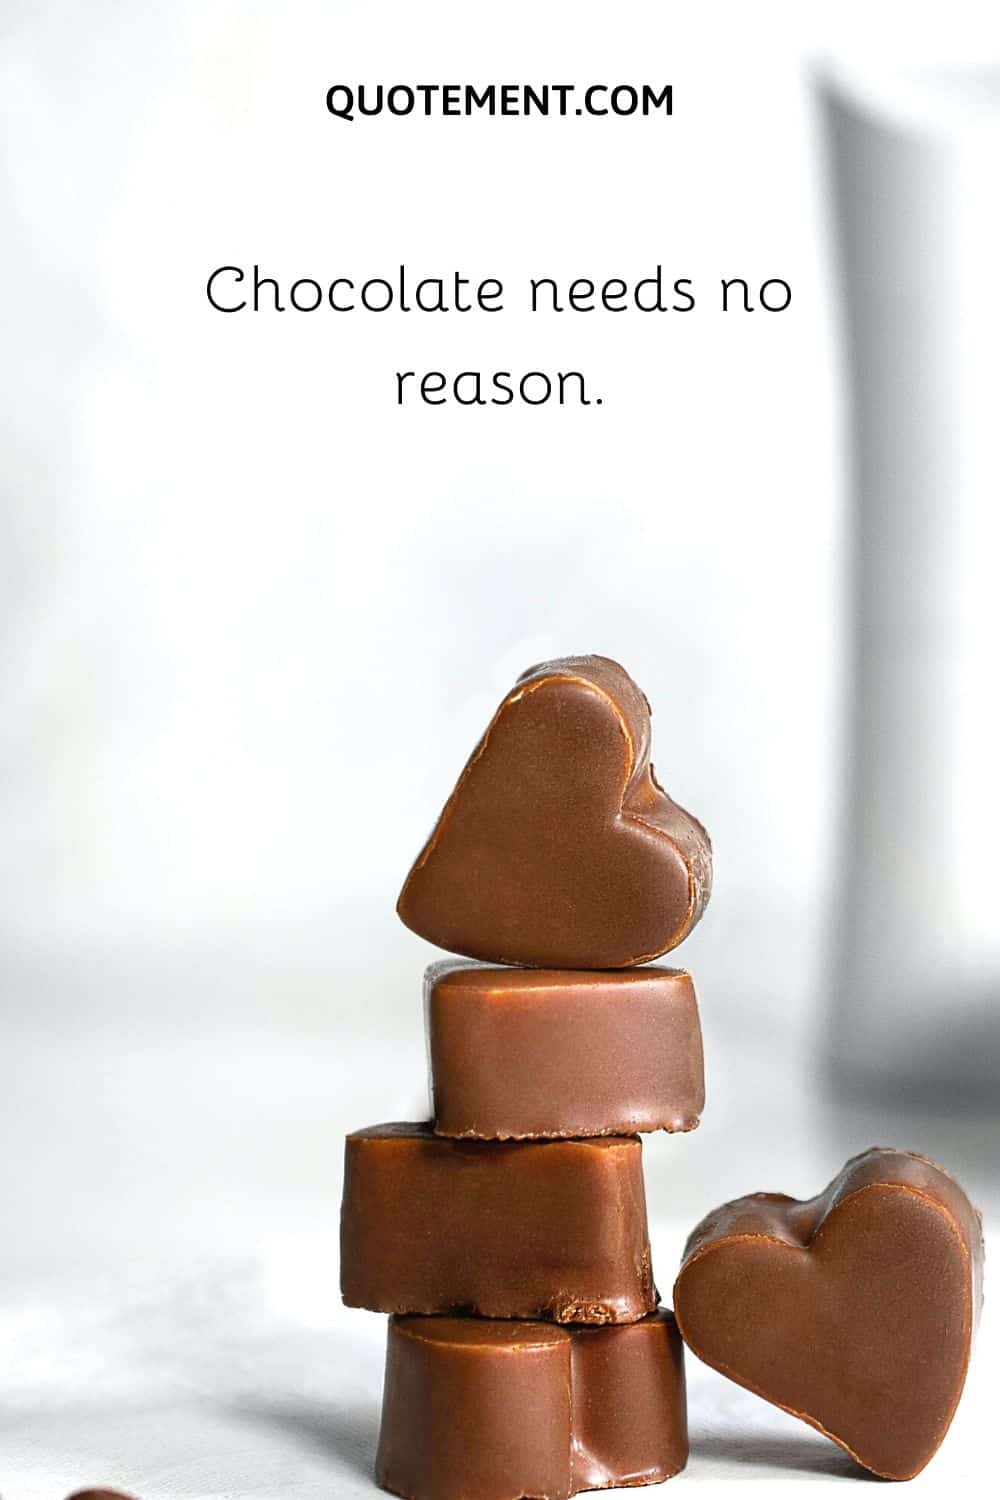 Chocolate needs no reason.